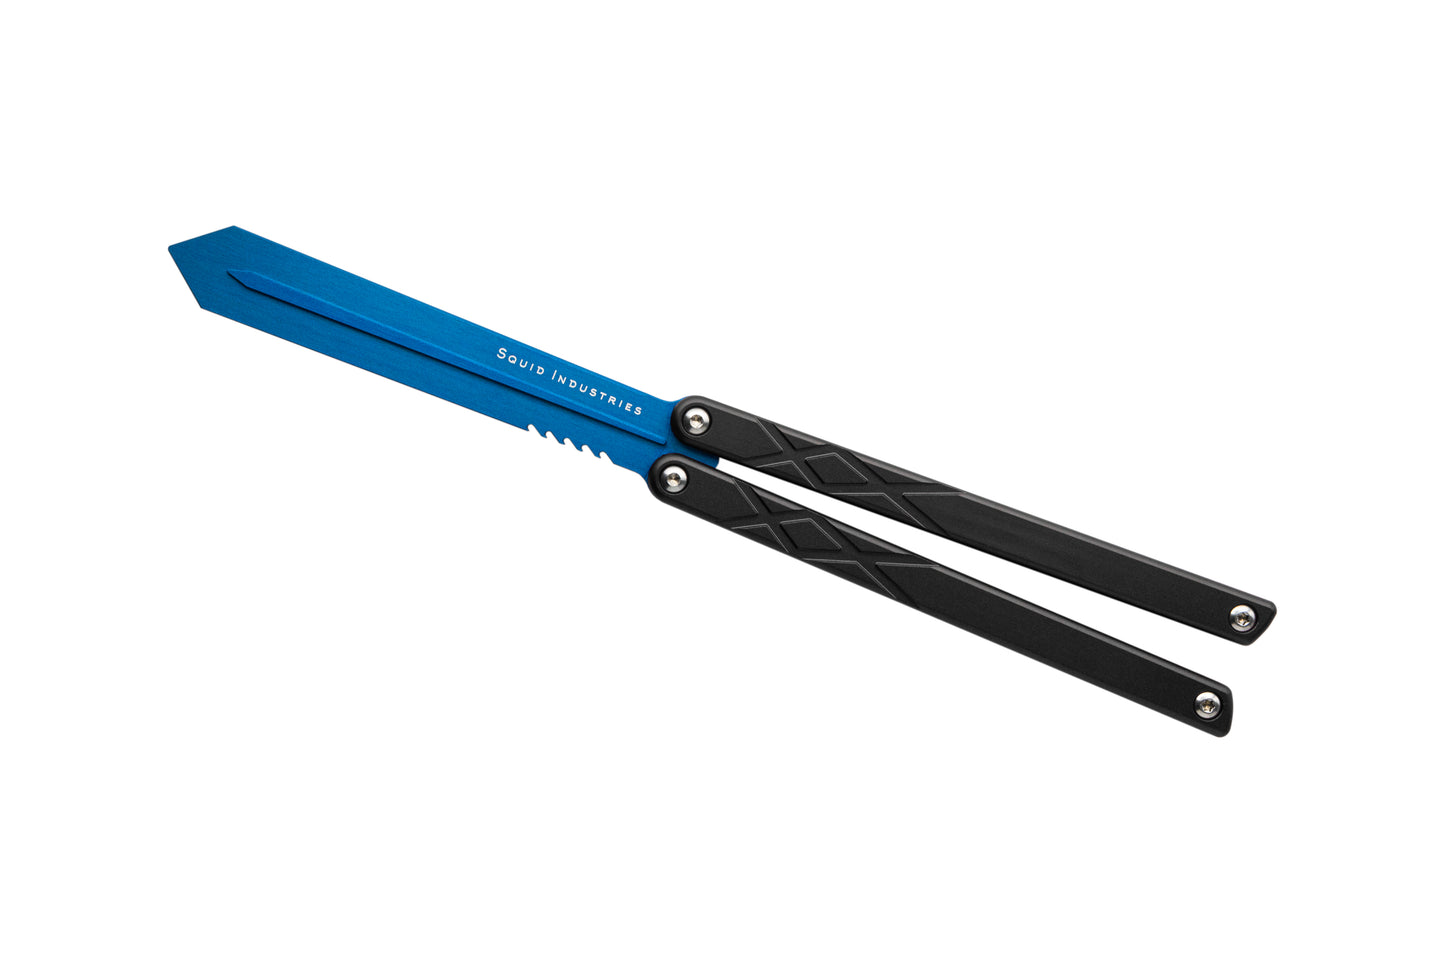 blue blade black handles silver hardware swordfish balisosng butterfly knife trainer fidget toy